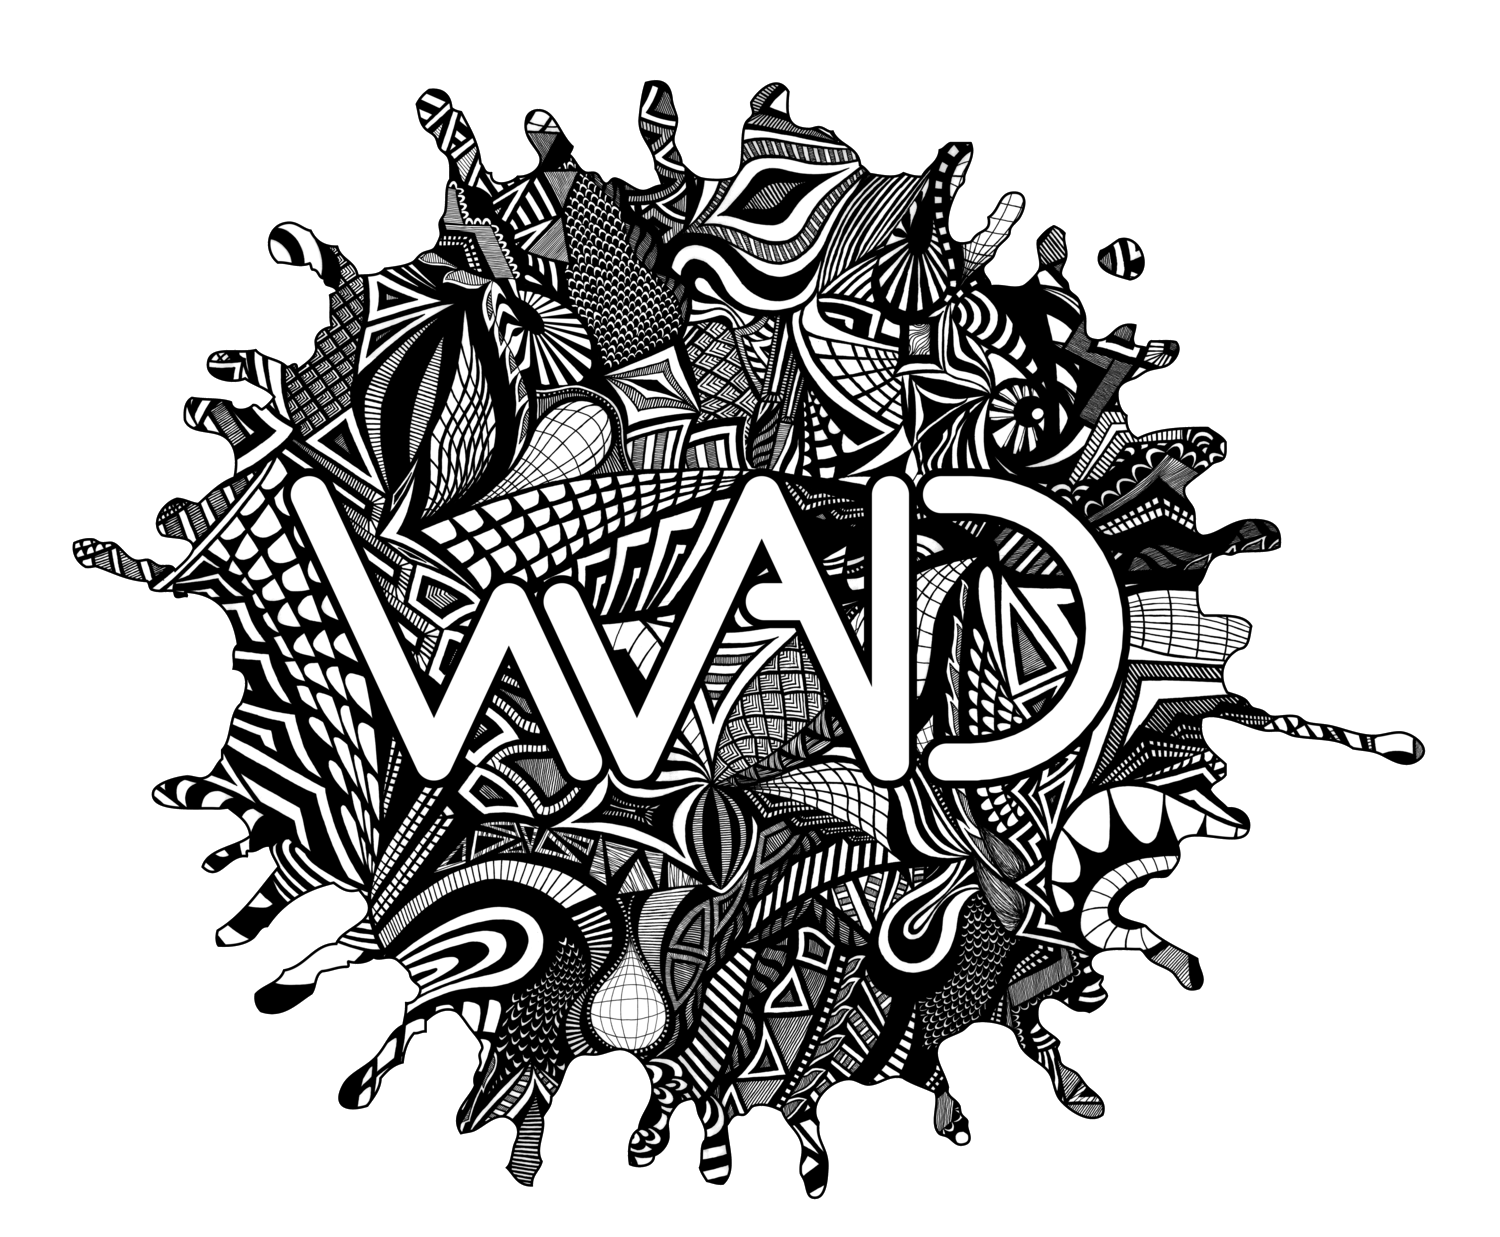 WAD Dubbo